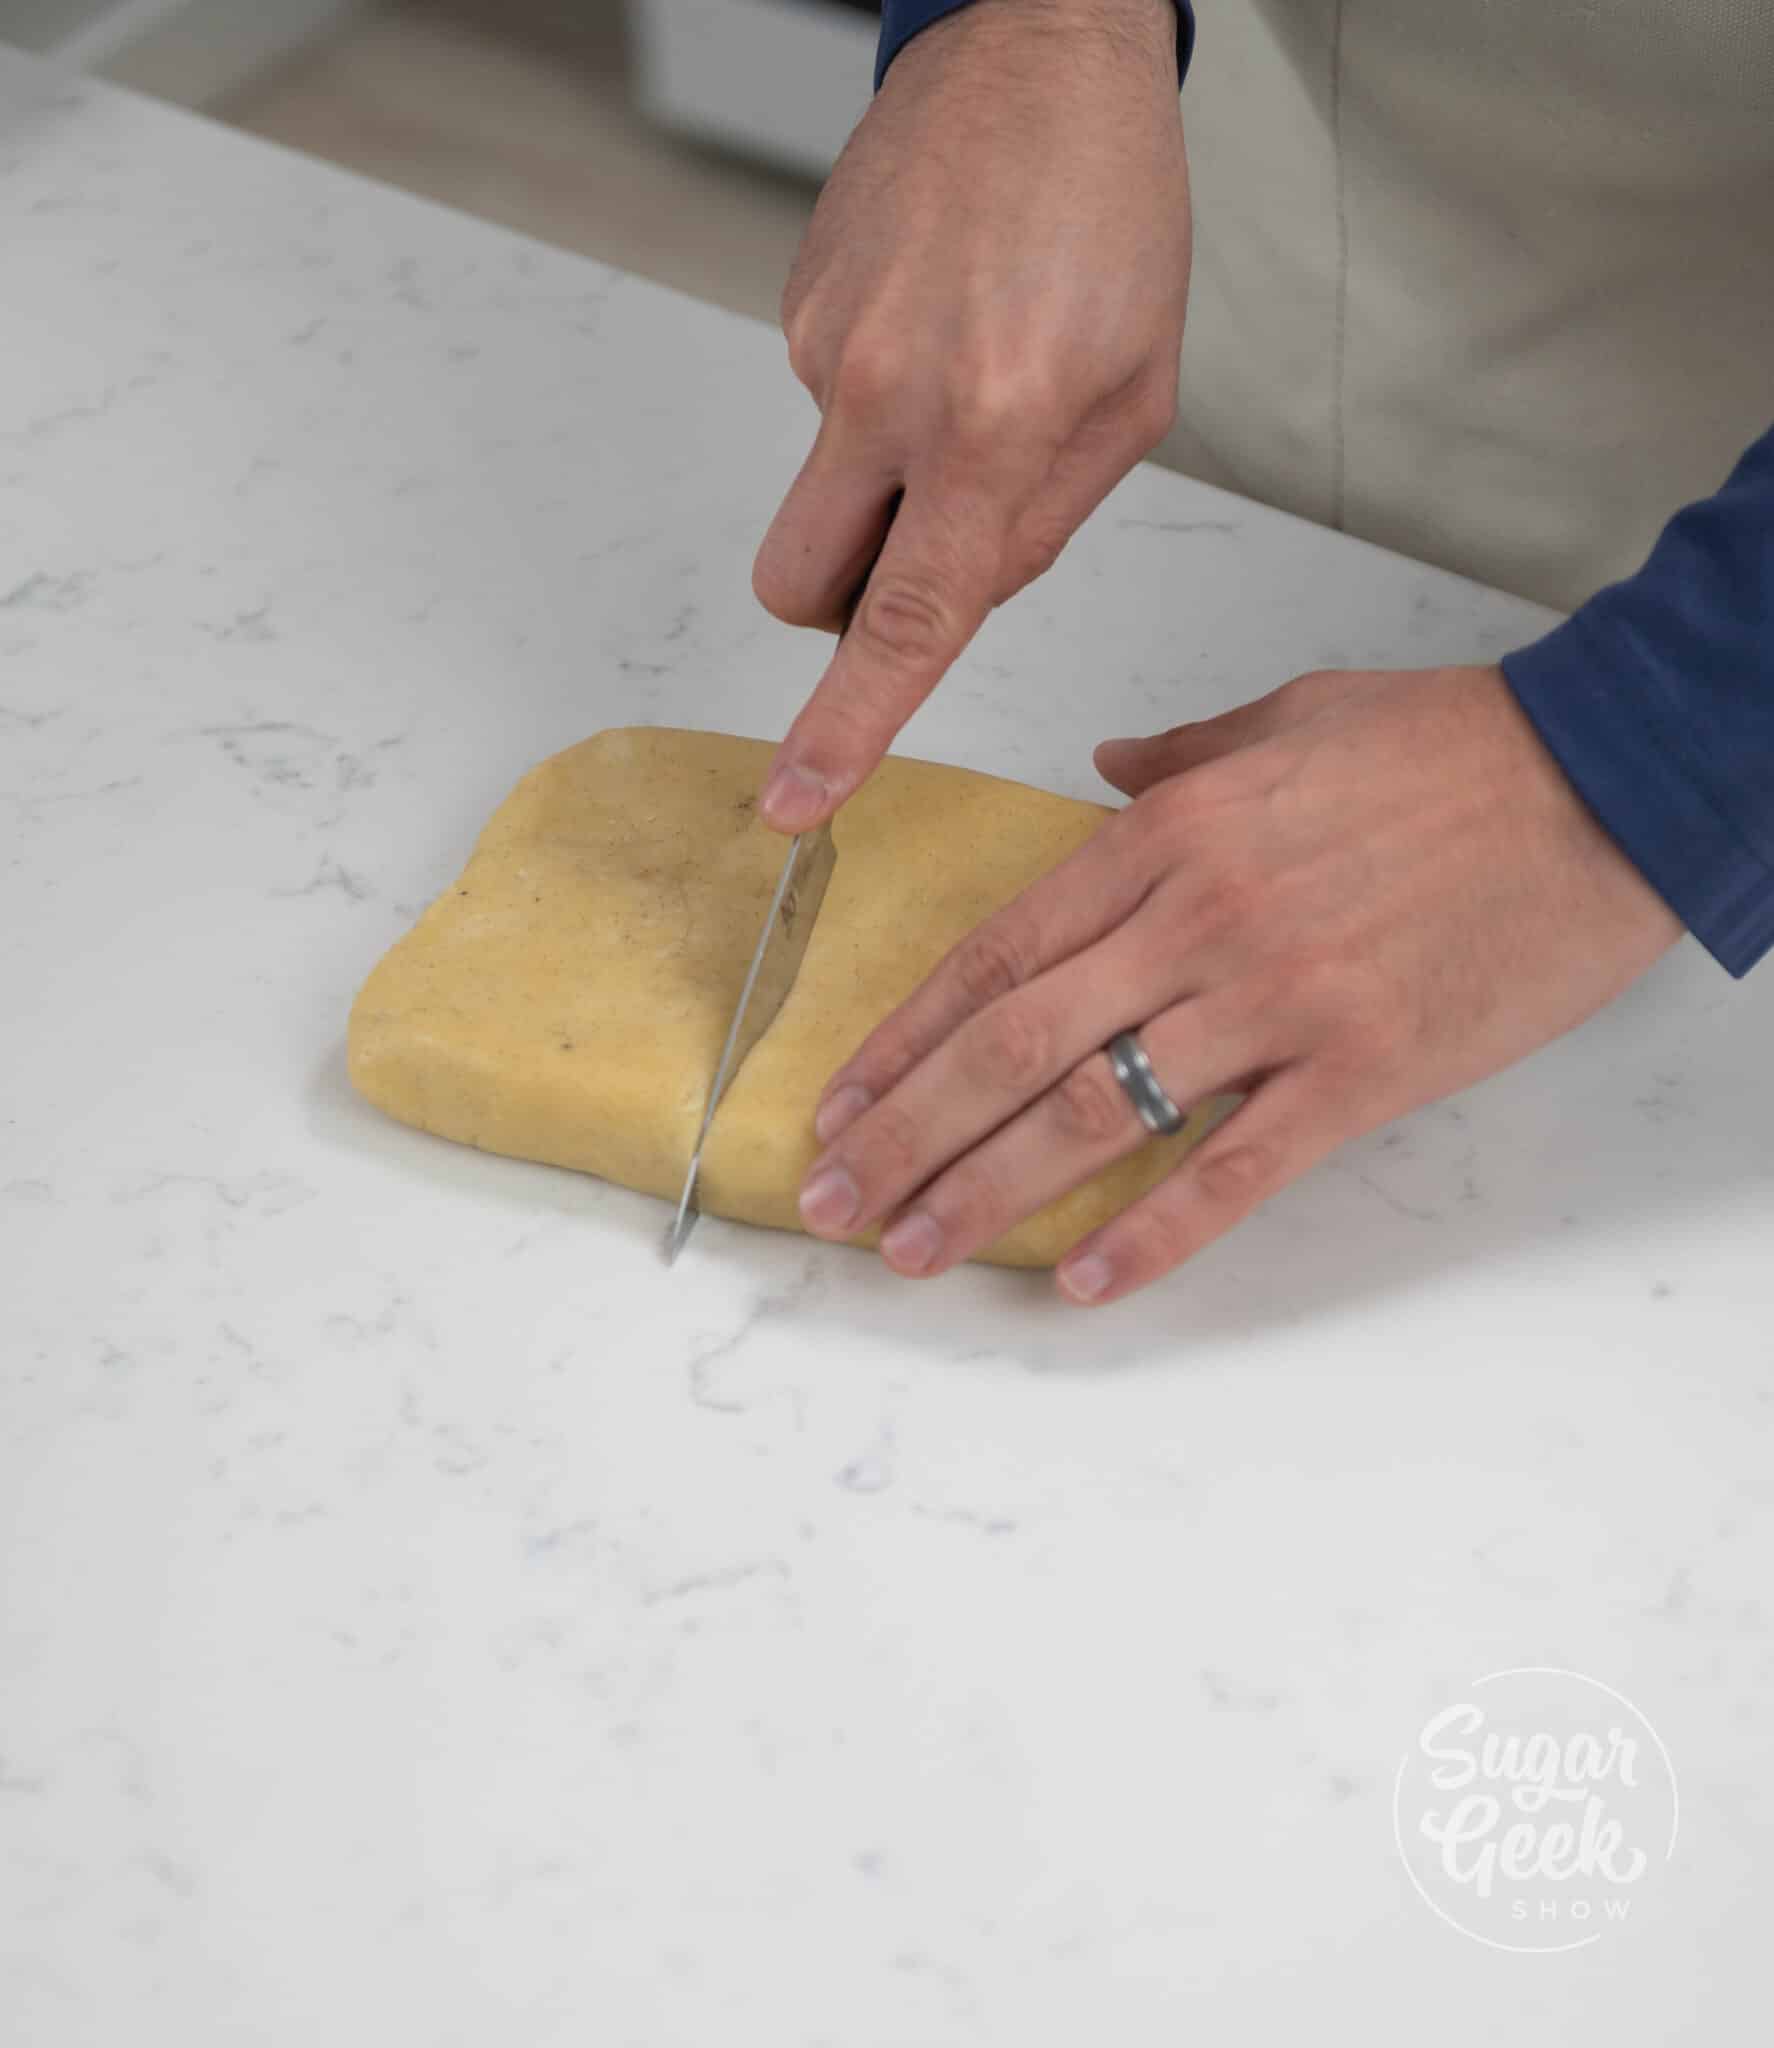 hands using a knife to cut tart dough in half.